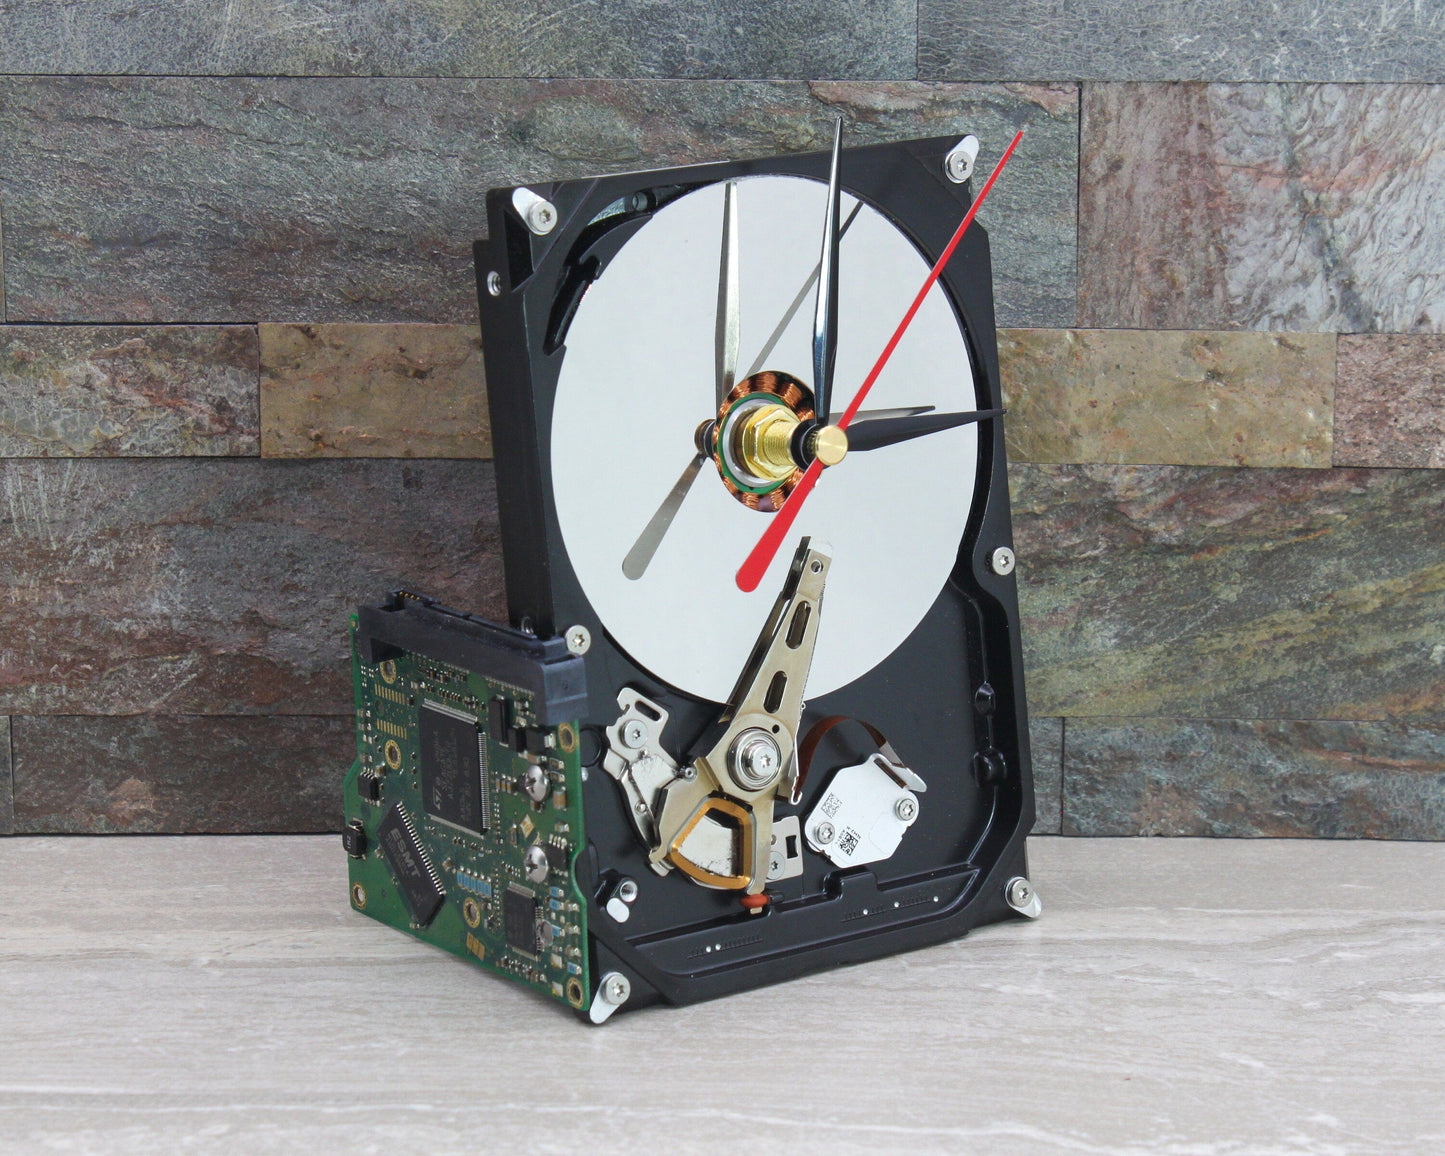 LightAndTimeArt Harddrive Clock Upcycled Slim Black & Silver Hard Drive Clock - Modern Desk Clock - Gift for geeks, nerds, office, IT, new job gift, industrial design